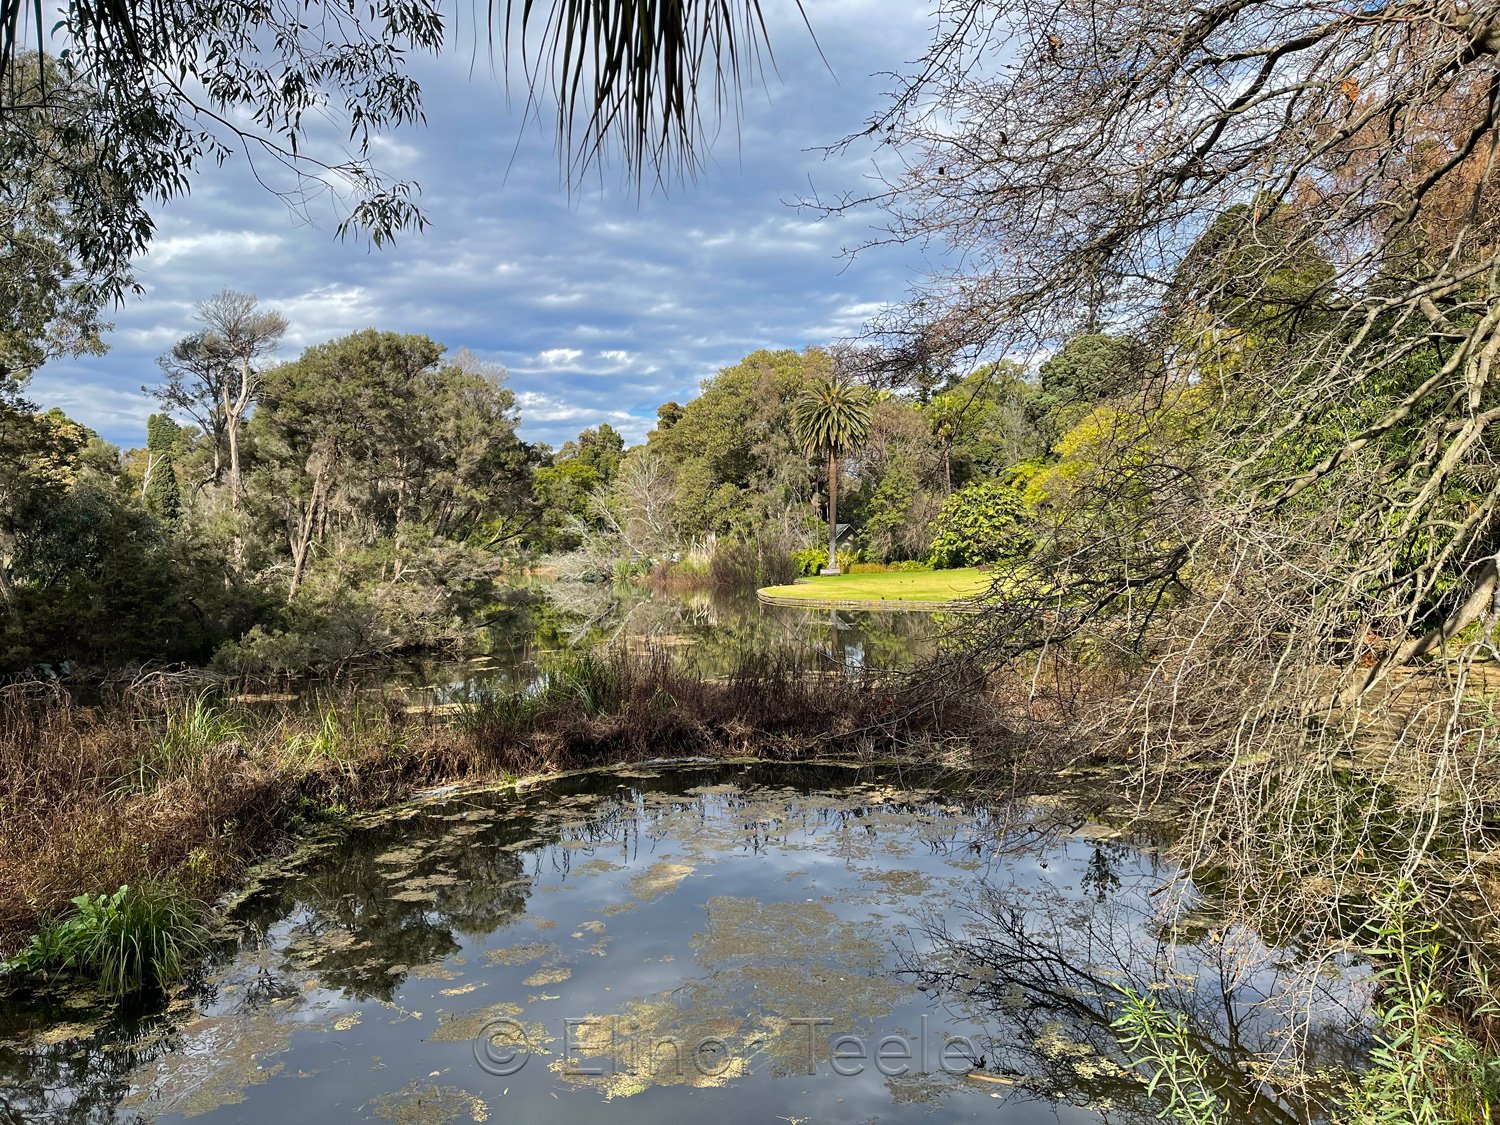 Royal Botanic Gardens, Melbourne 2